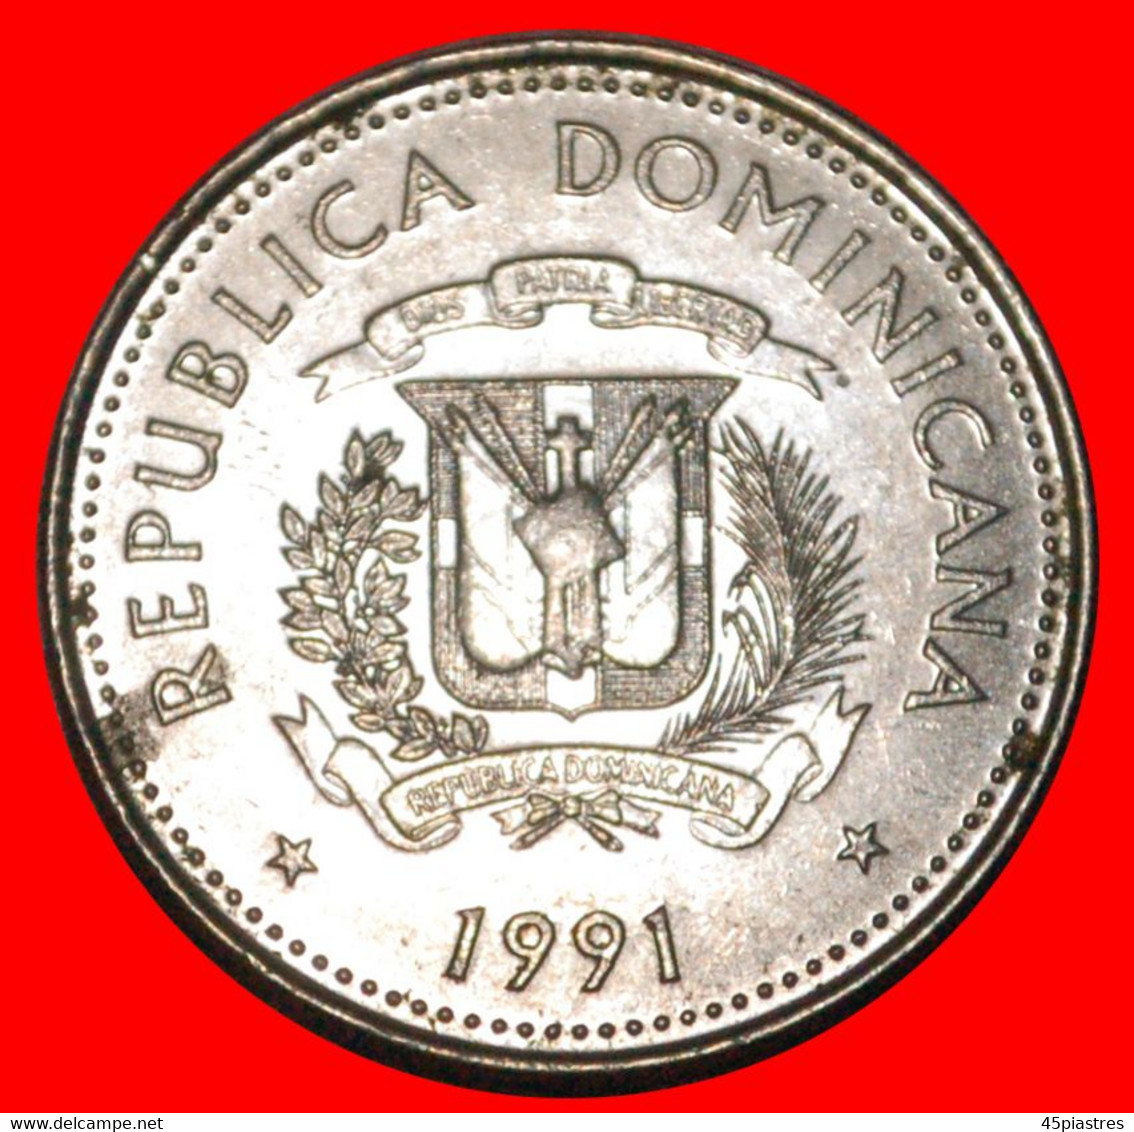 * CANADA (1989-1991): DOMINICAN REPUBLIC ★ 25 CENTAVOS 1991 MINT LUSTRE! OXEN! LOW START ★ NO RESERVE! - Dominicana